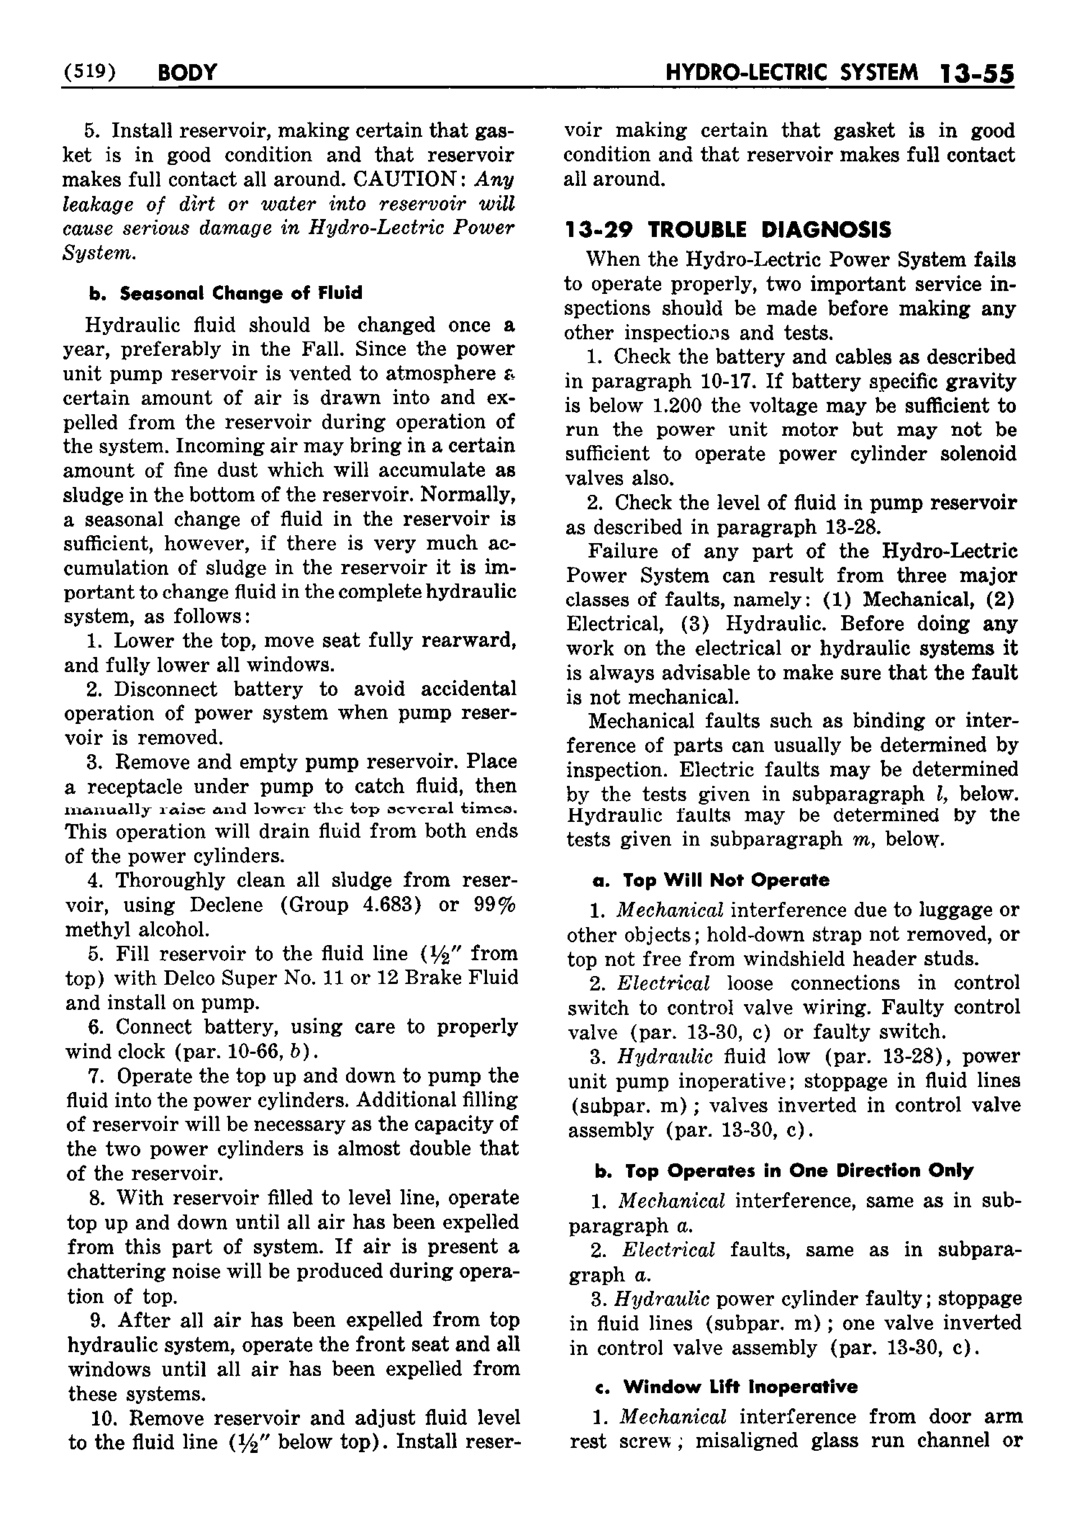 n_14 1952 Buick Shop Manual - Body-055-055.jpg